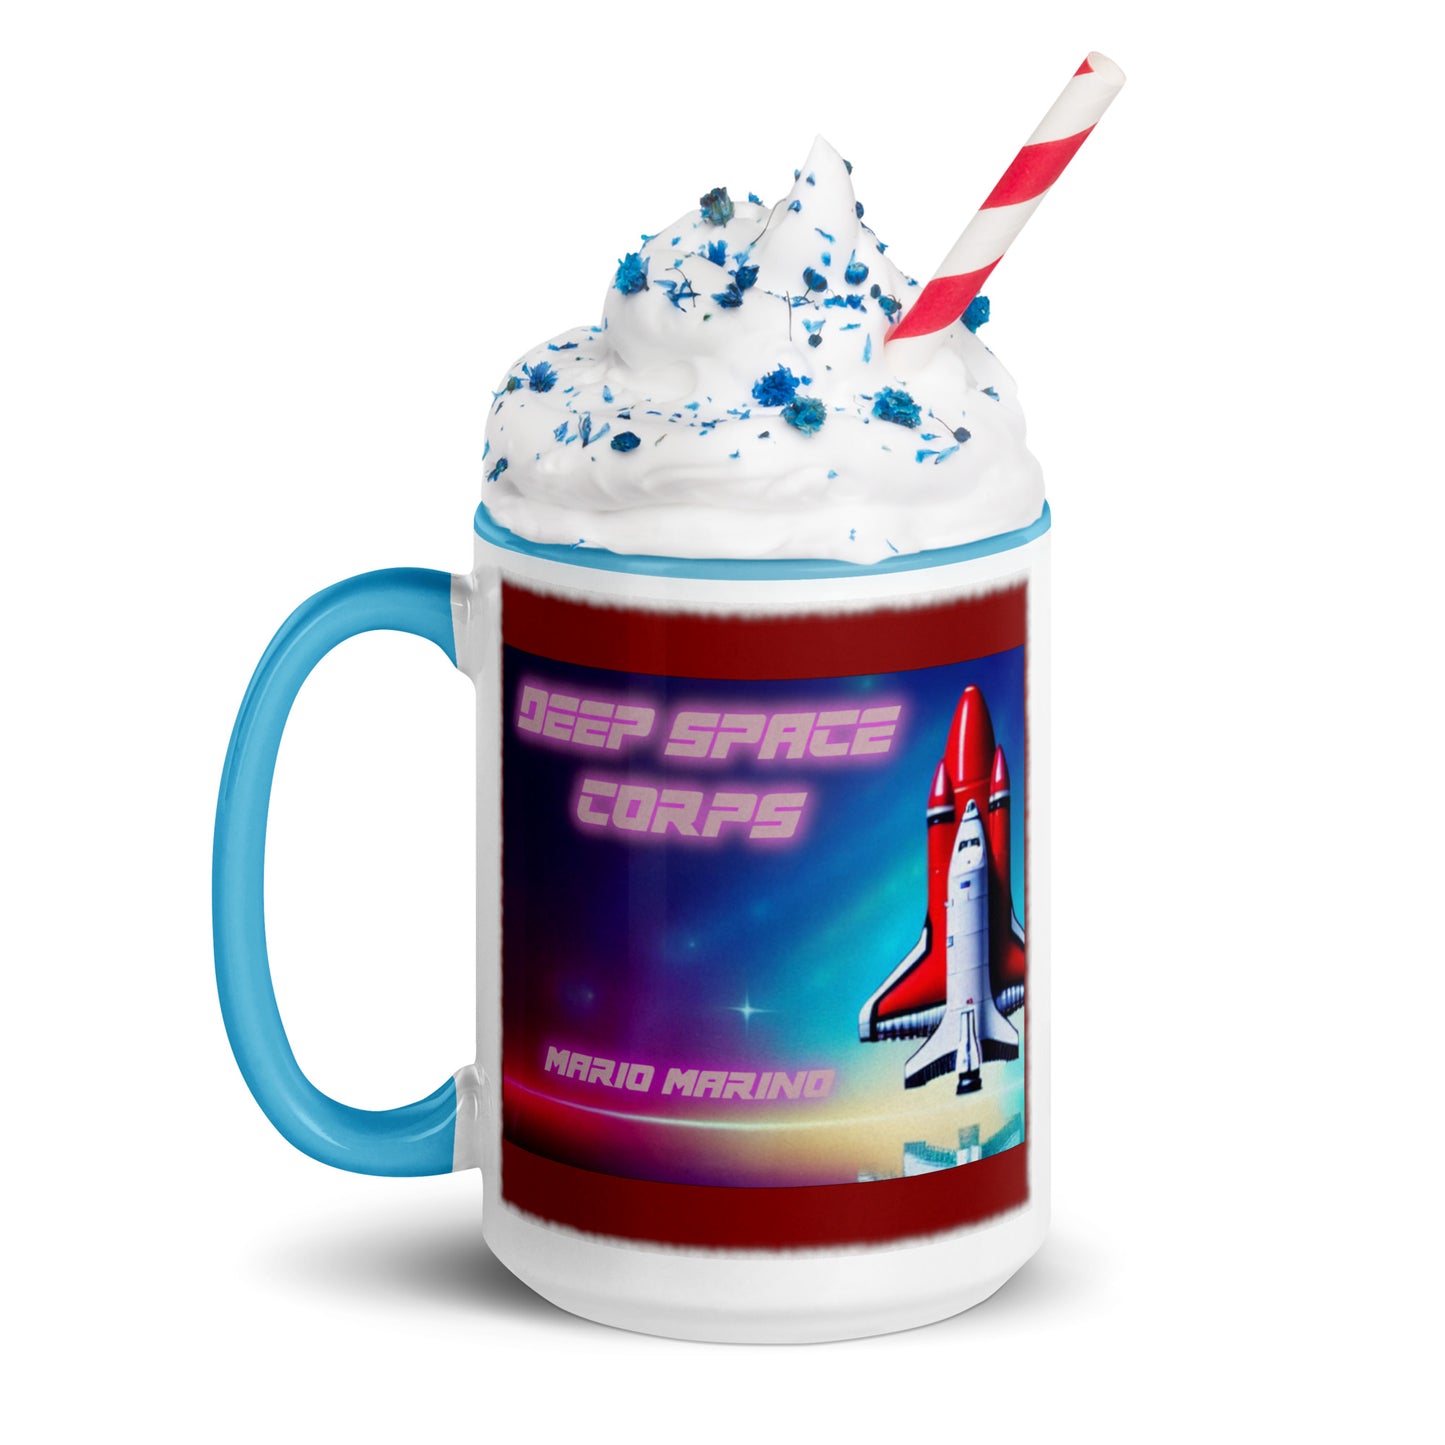 Mario Marino - Deep Space Corps Mug With Color Inside